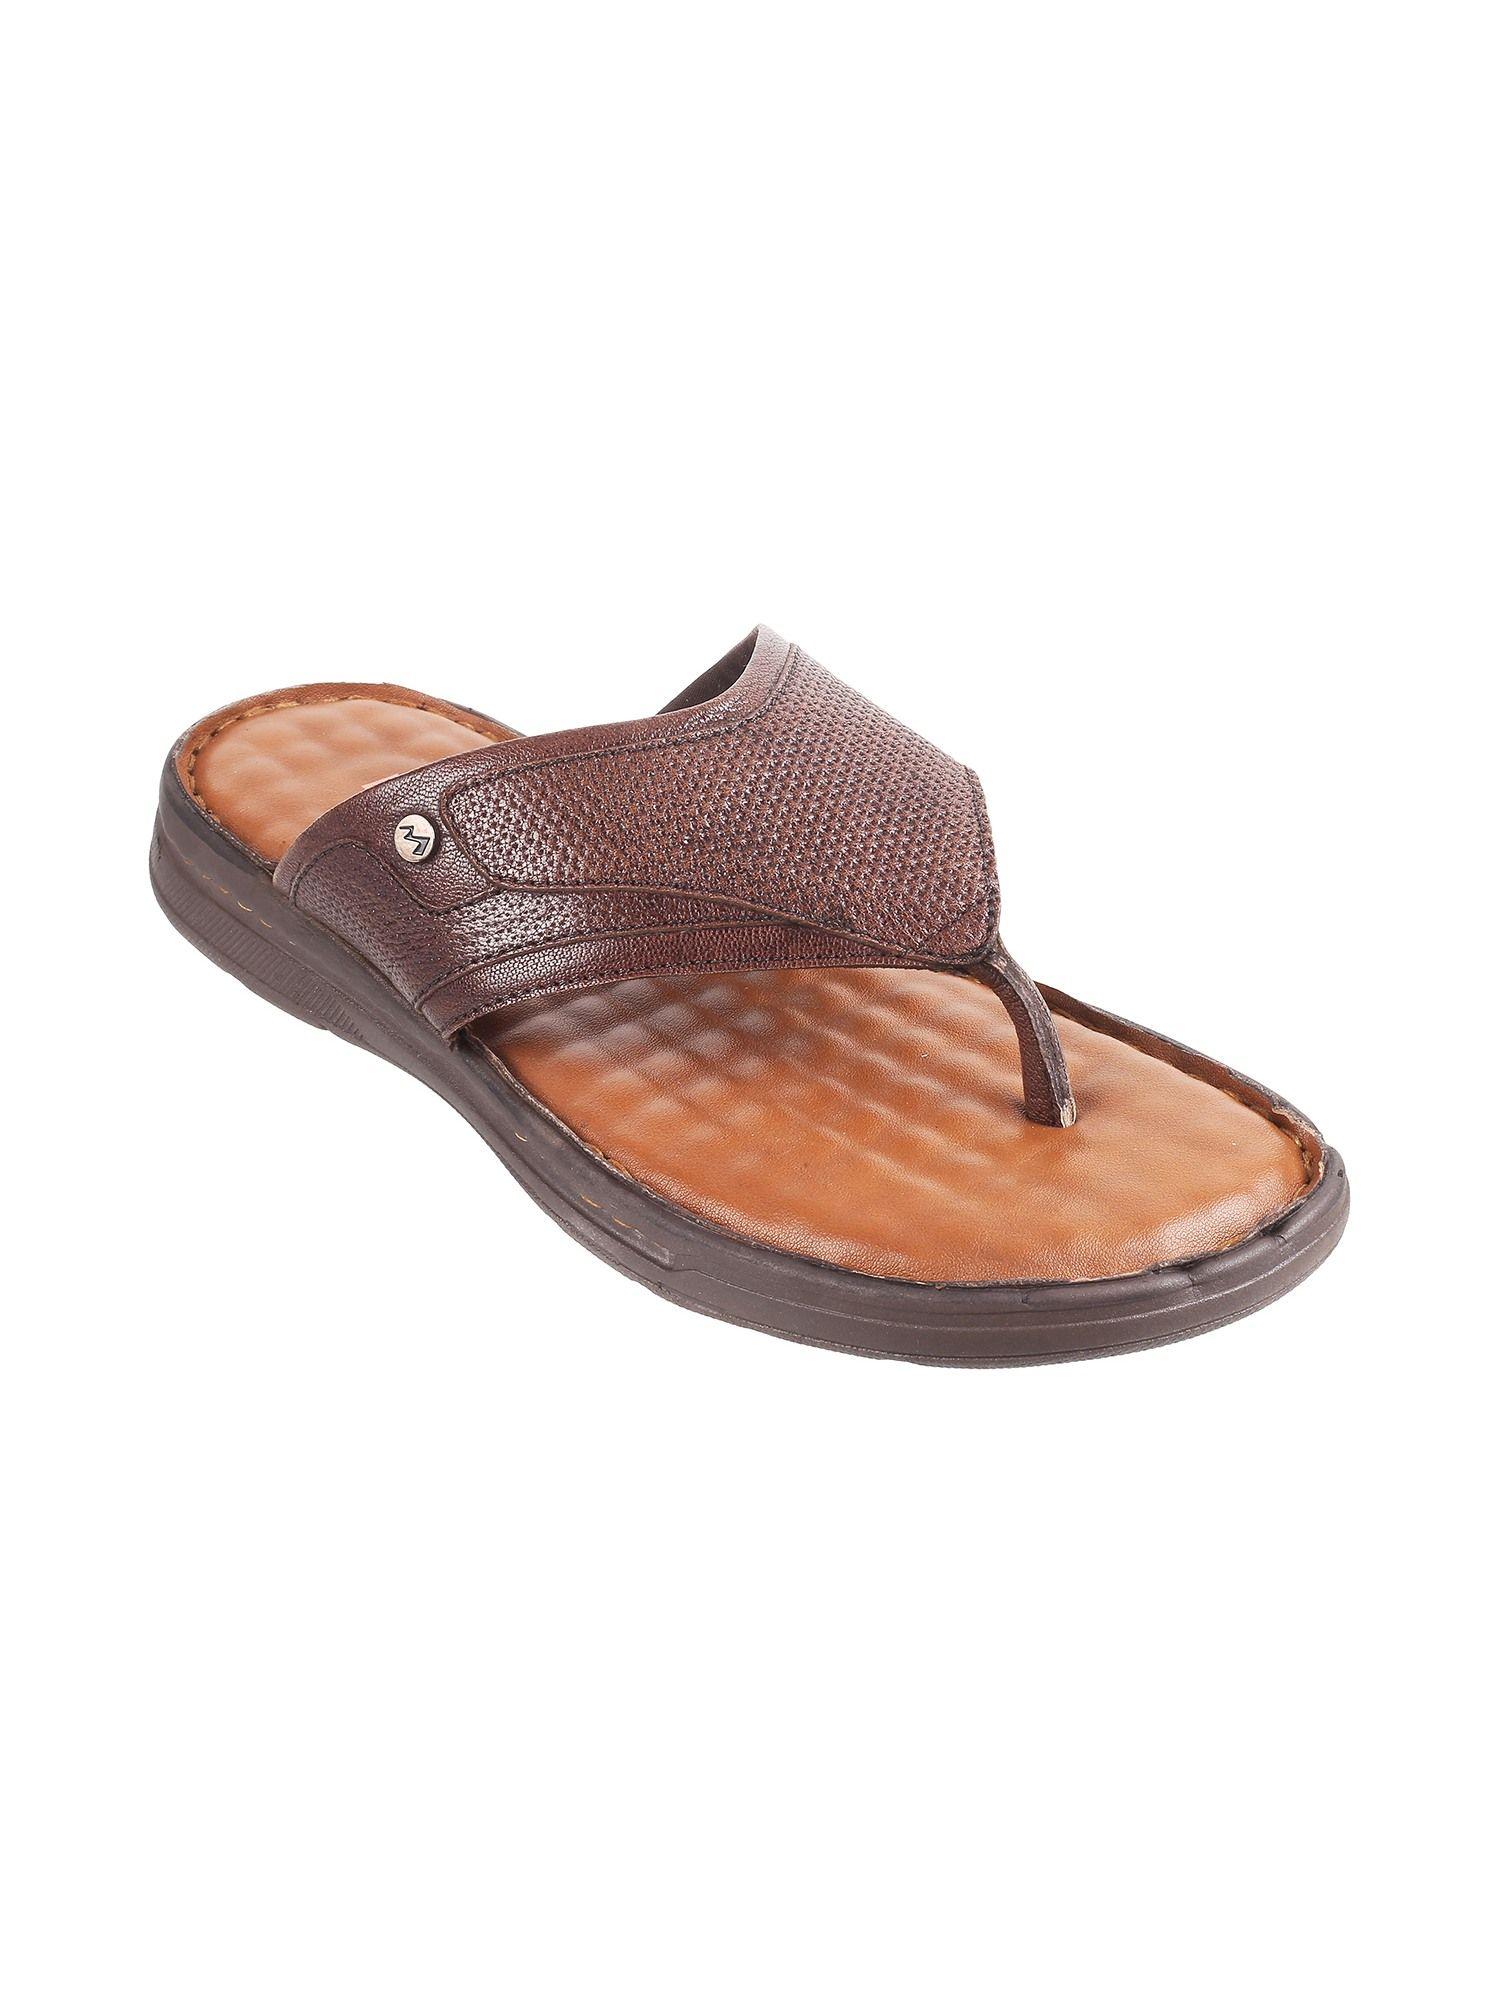 mens-brown-flat-chappalsmetro-men-brown-leather-sandals